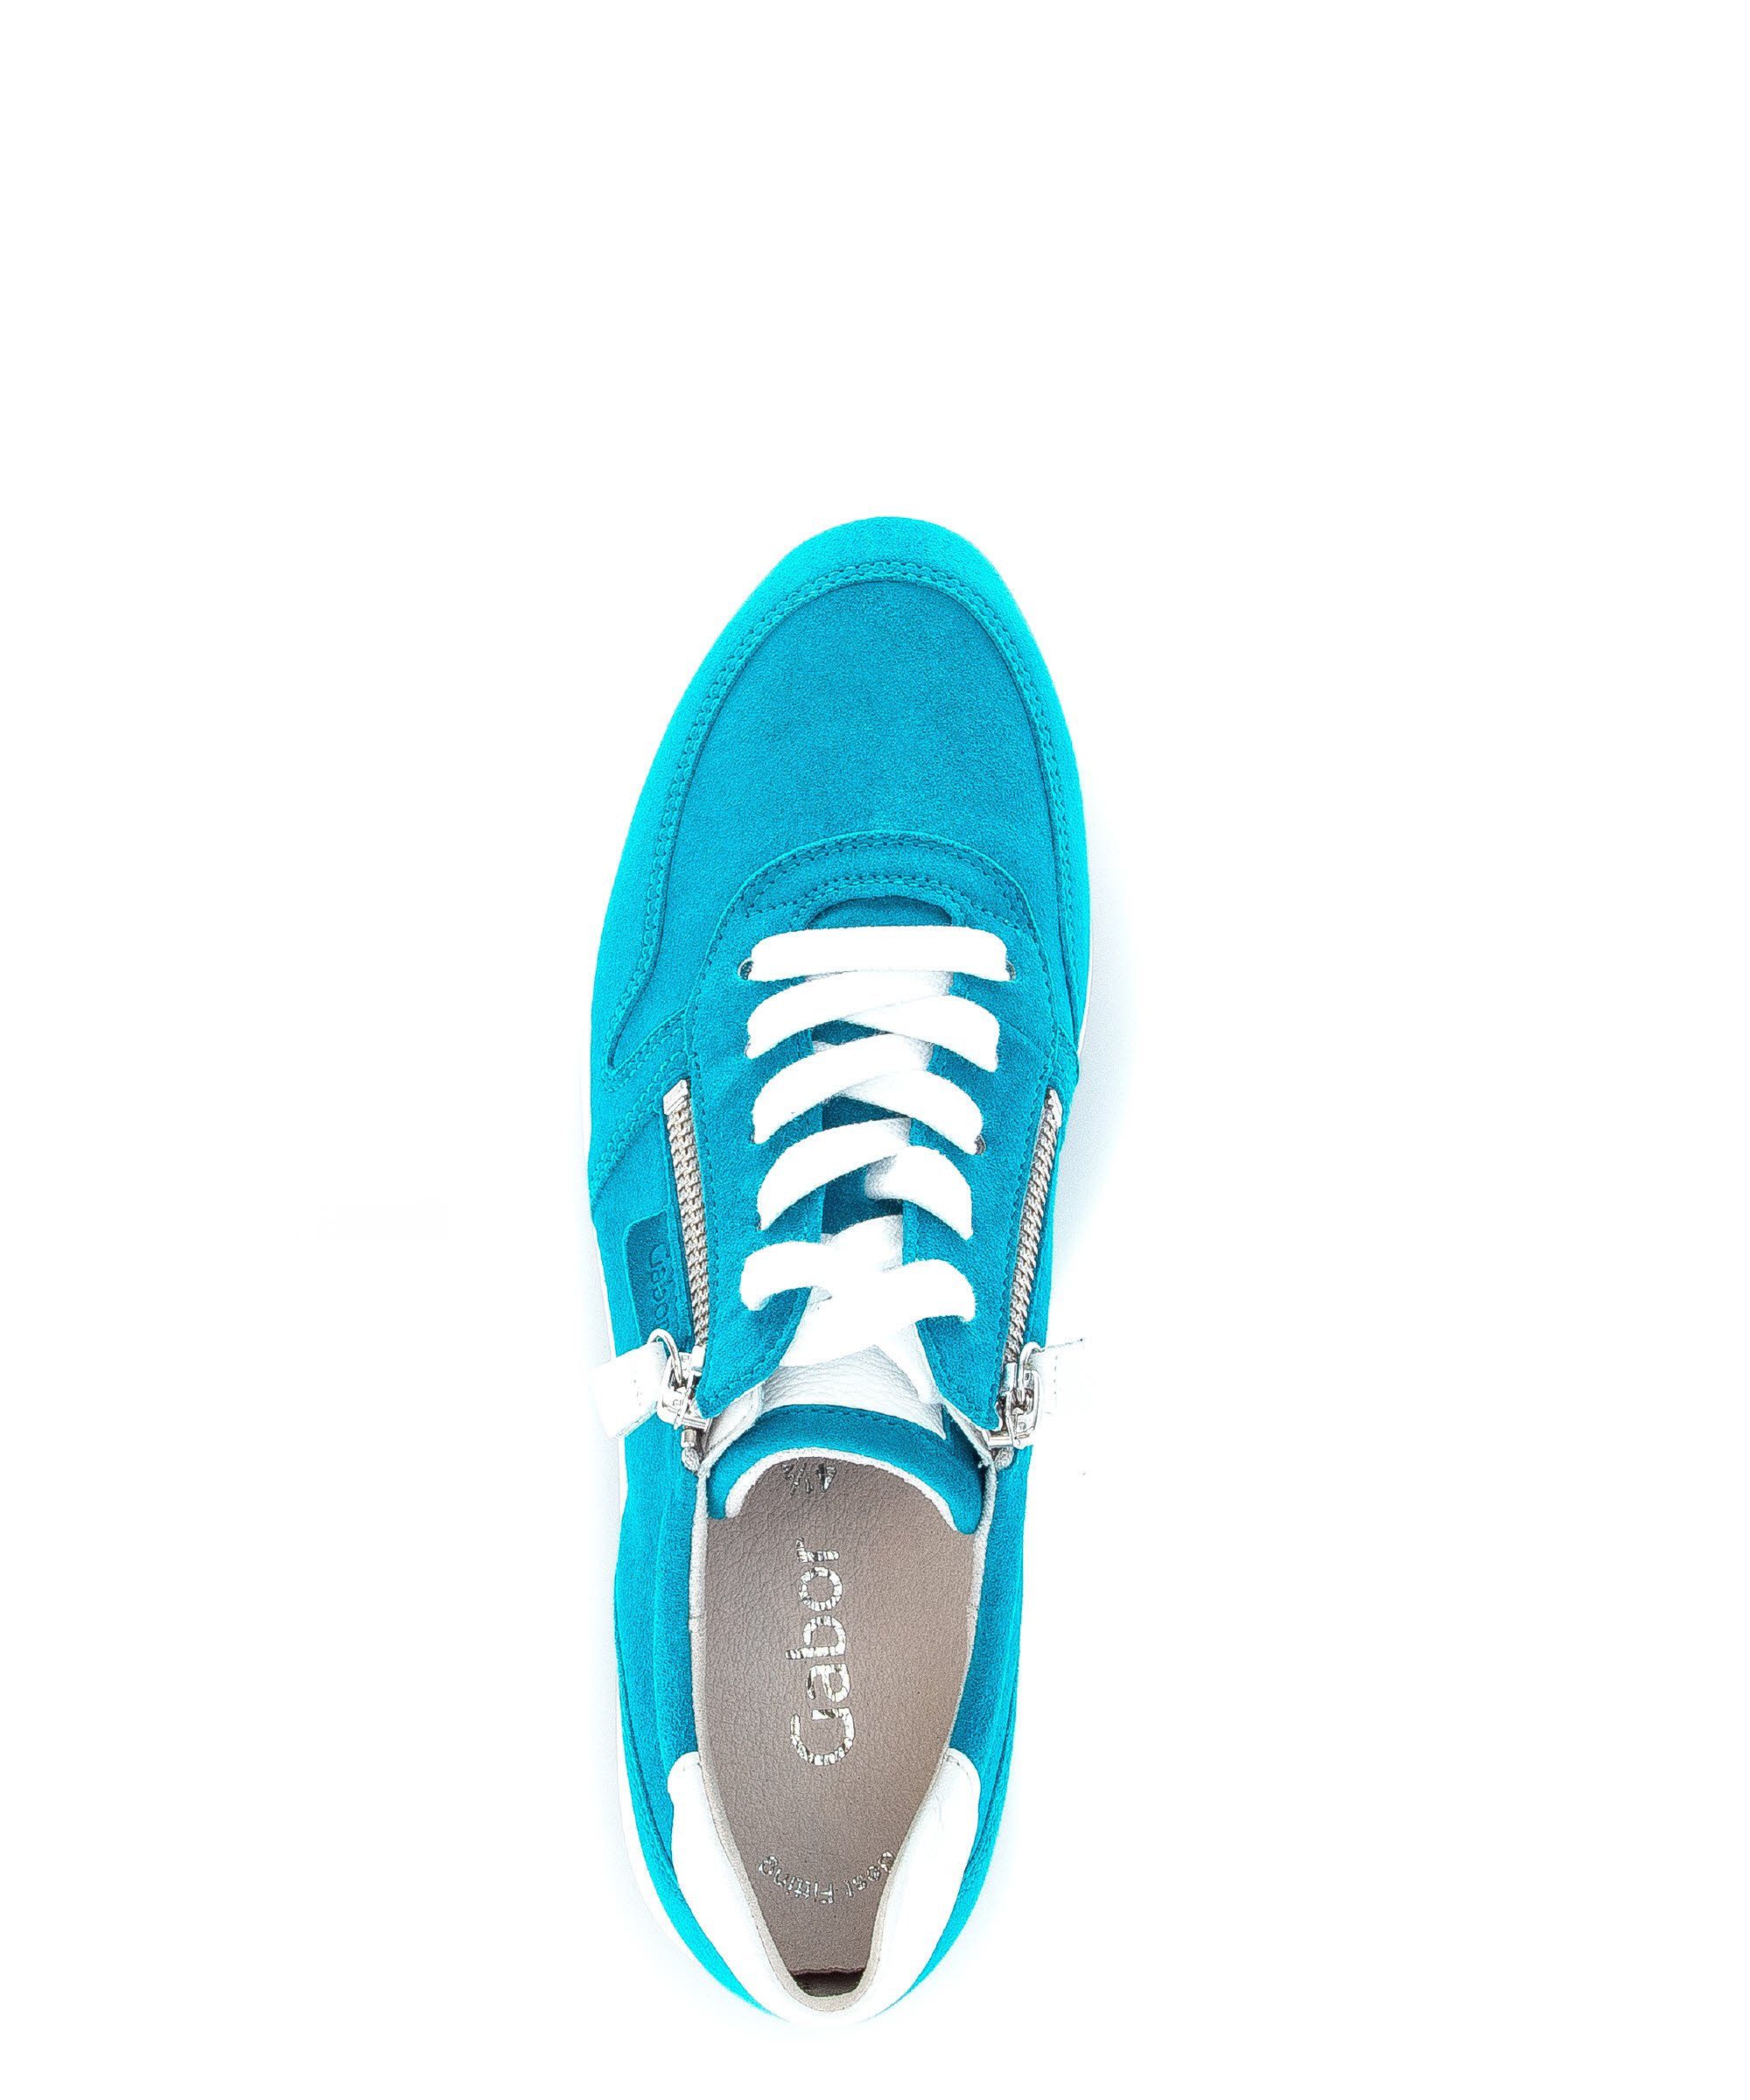 (caribic/weiss 36) Sneaker Blau Gabor 83.450.36 /